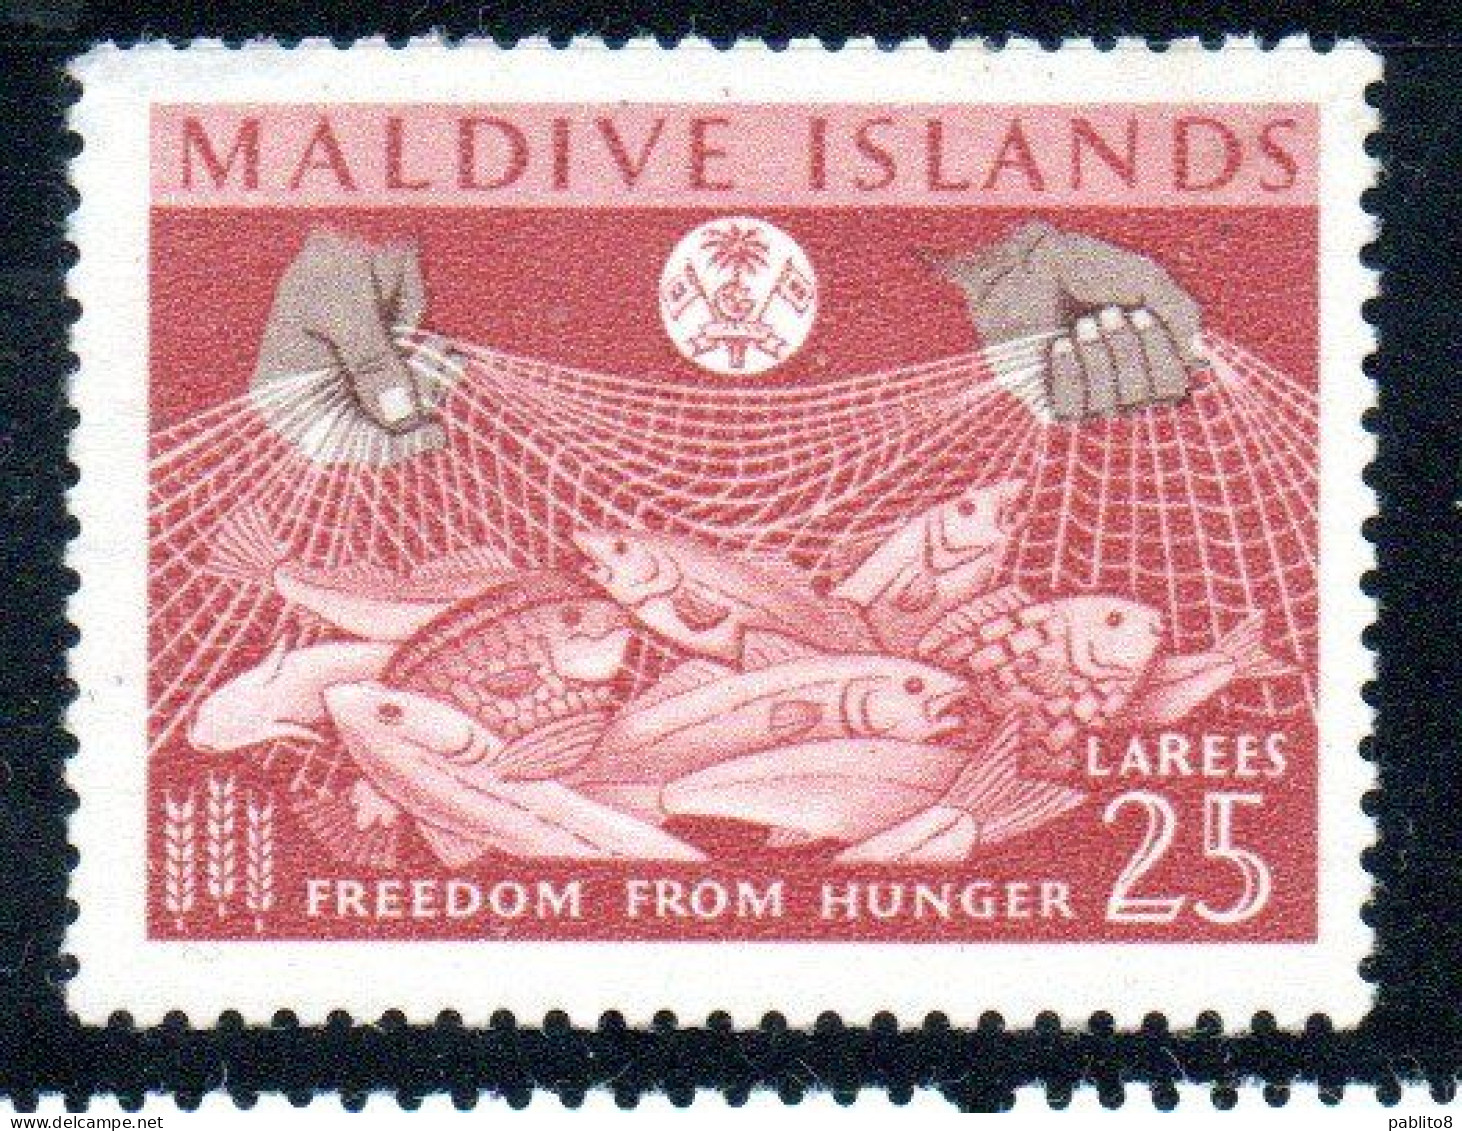 MALDIVES ISLANDS ISOLE MALDIVE BRITISH PROTECTORATED 1963 FAO FREEDOM FROM HUNGER 25L MLH - Maldiven (...-1965)